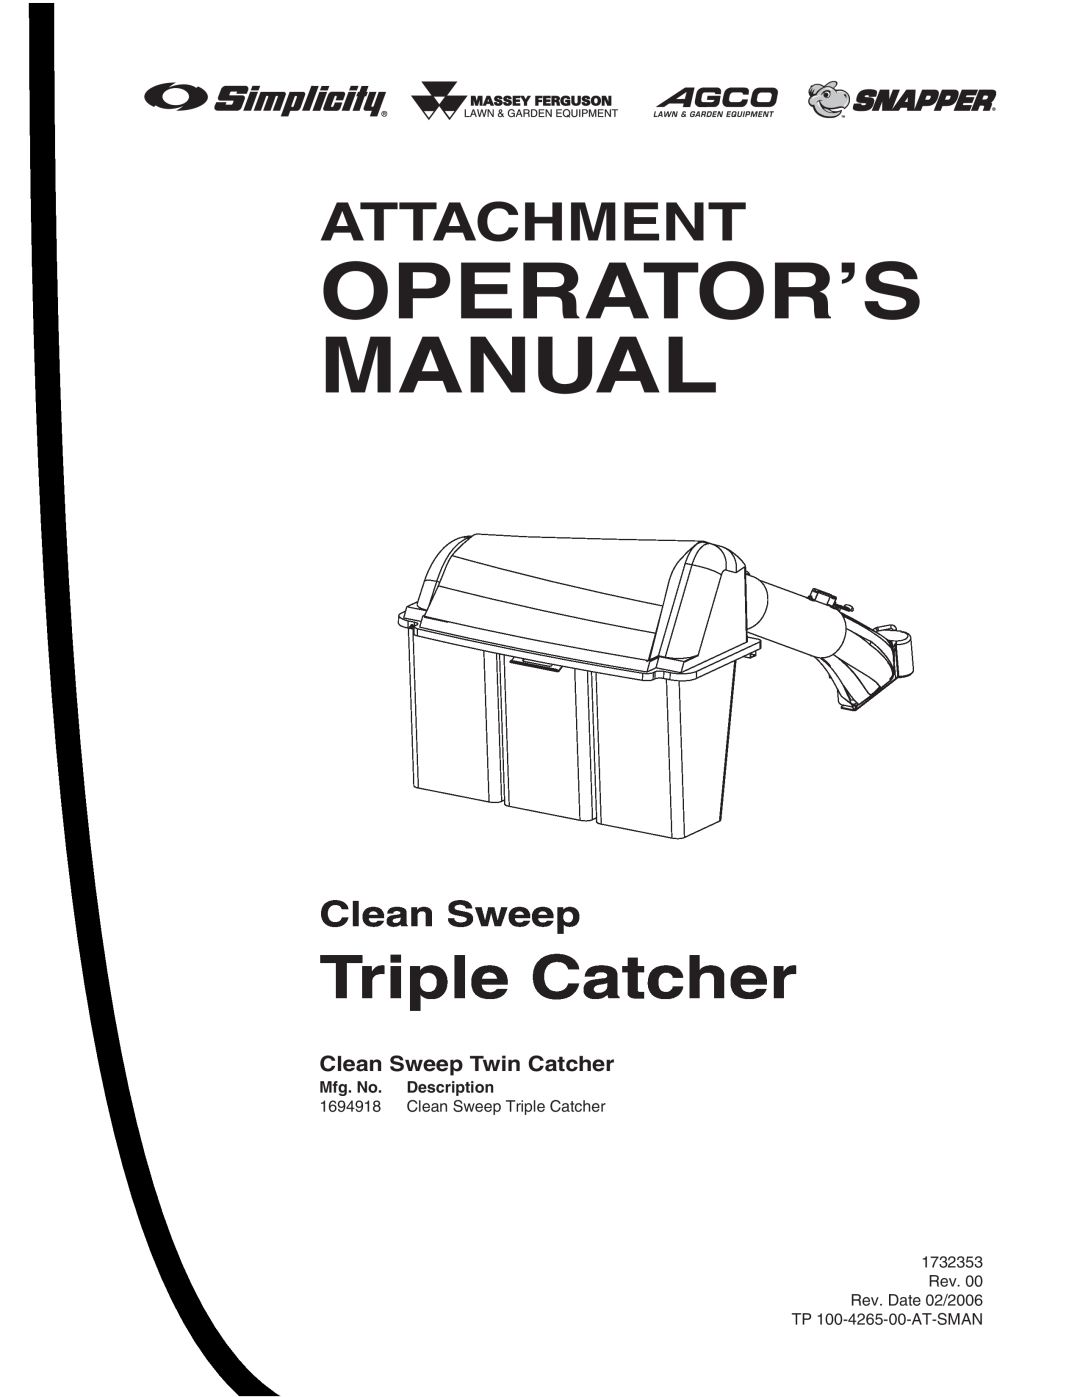 Simplicity 1694918 manual Clean Sweep Twin Catcher, Operator’S Manual, Triple Catcher, Attachment, Mfg. No. Description 